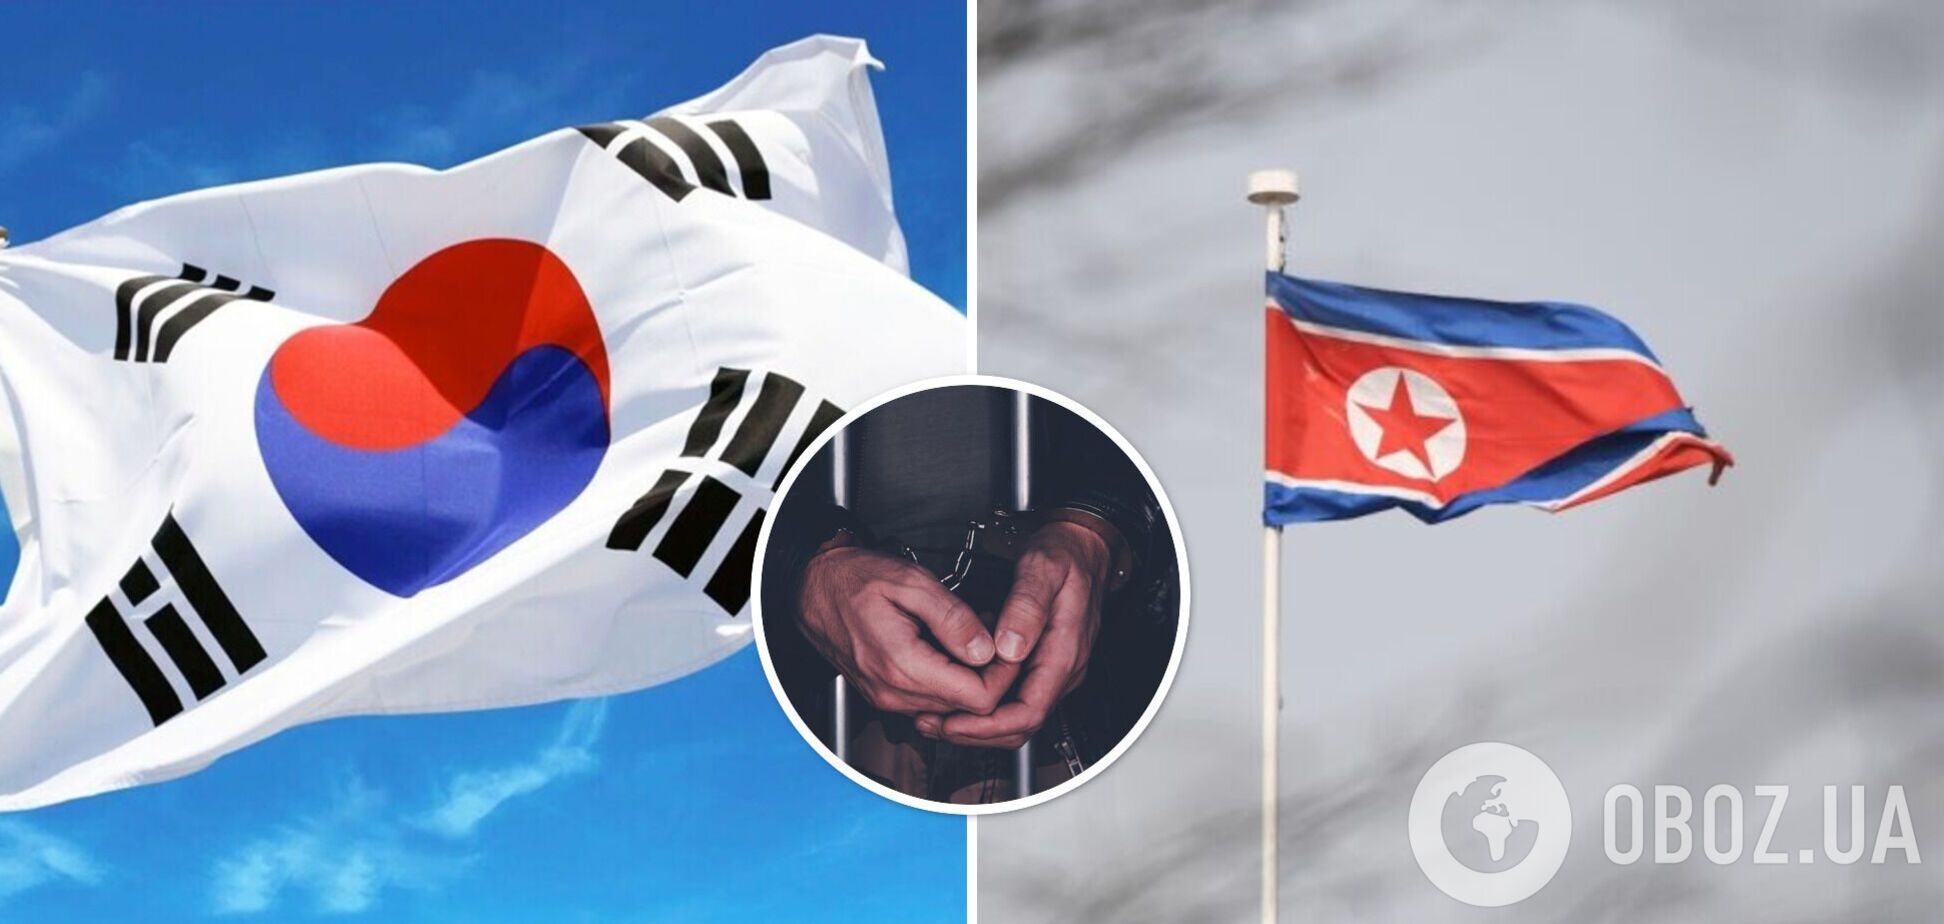 В КНДР граждан казнят за распространение видео из Южной Кореи – СМИ